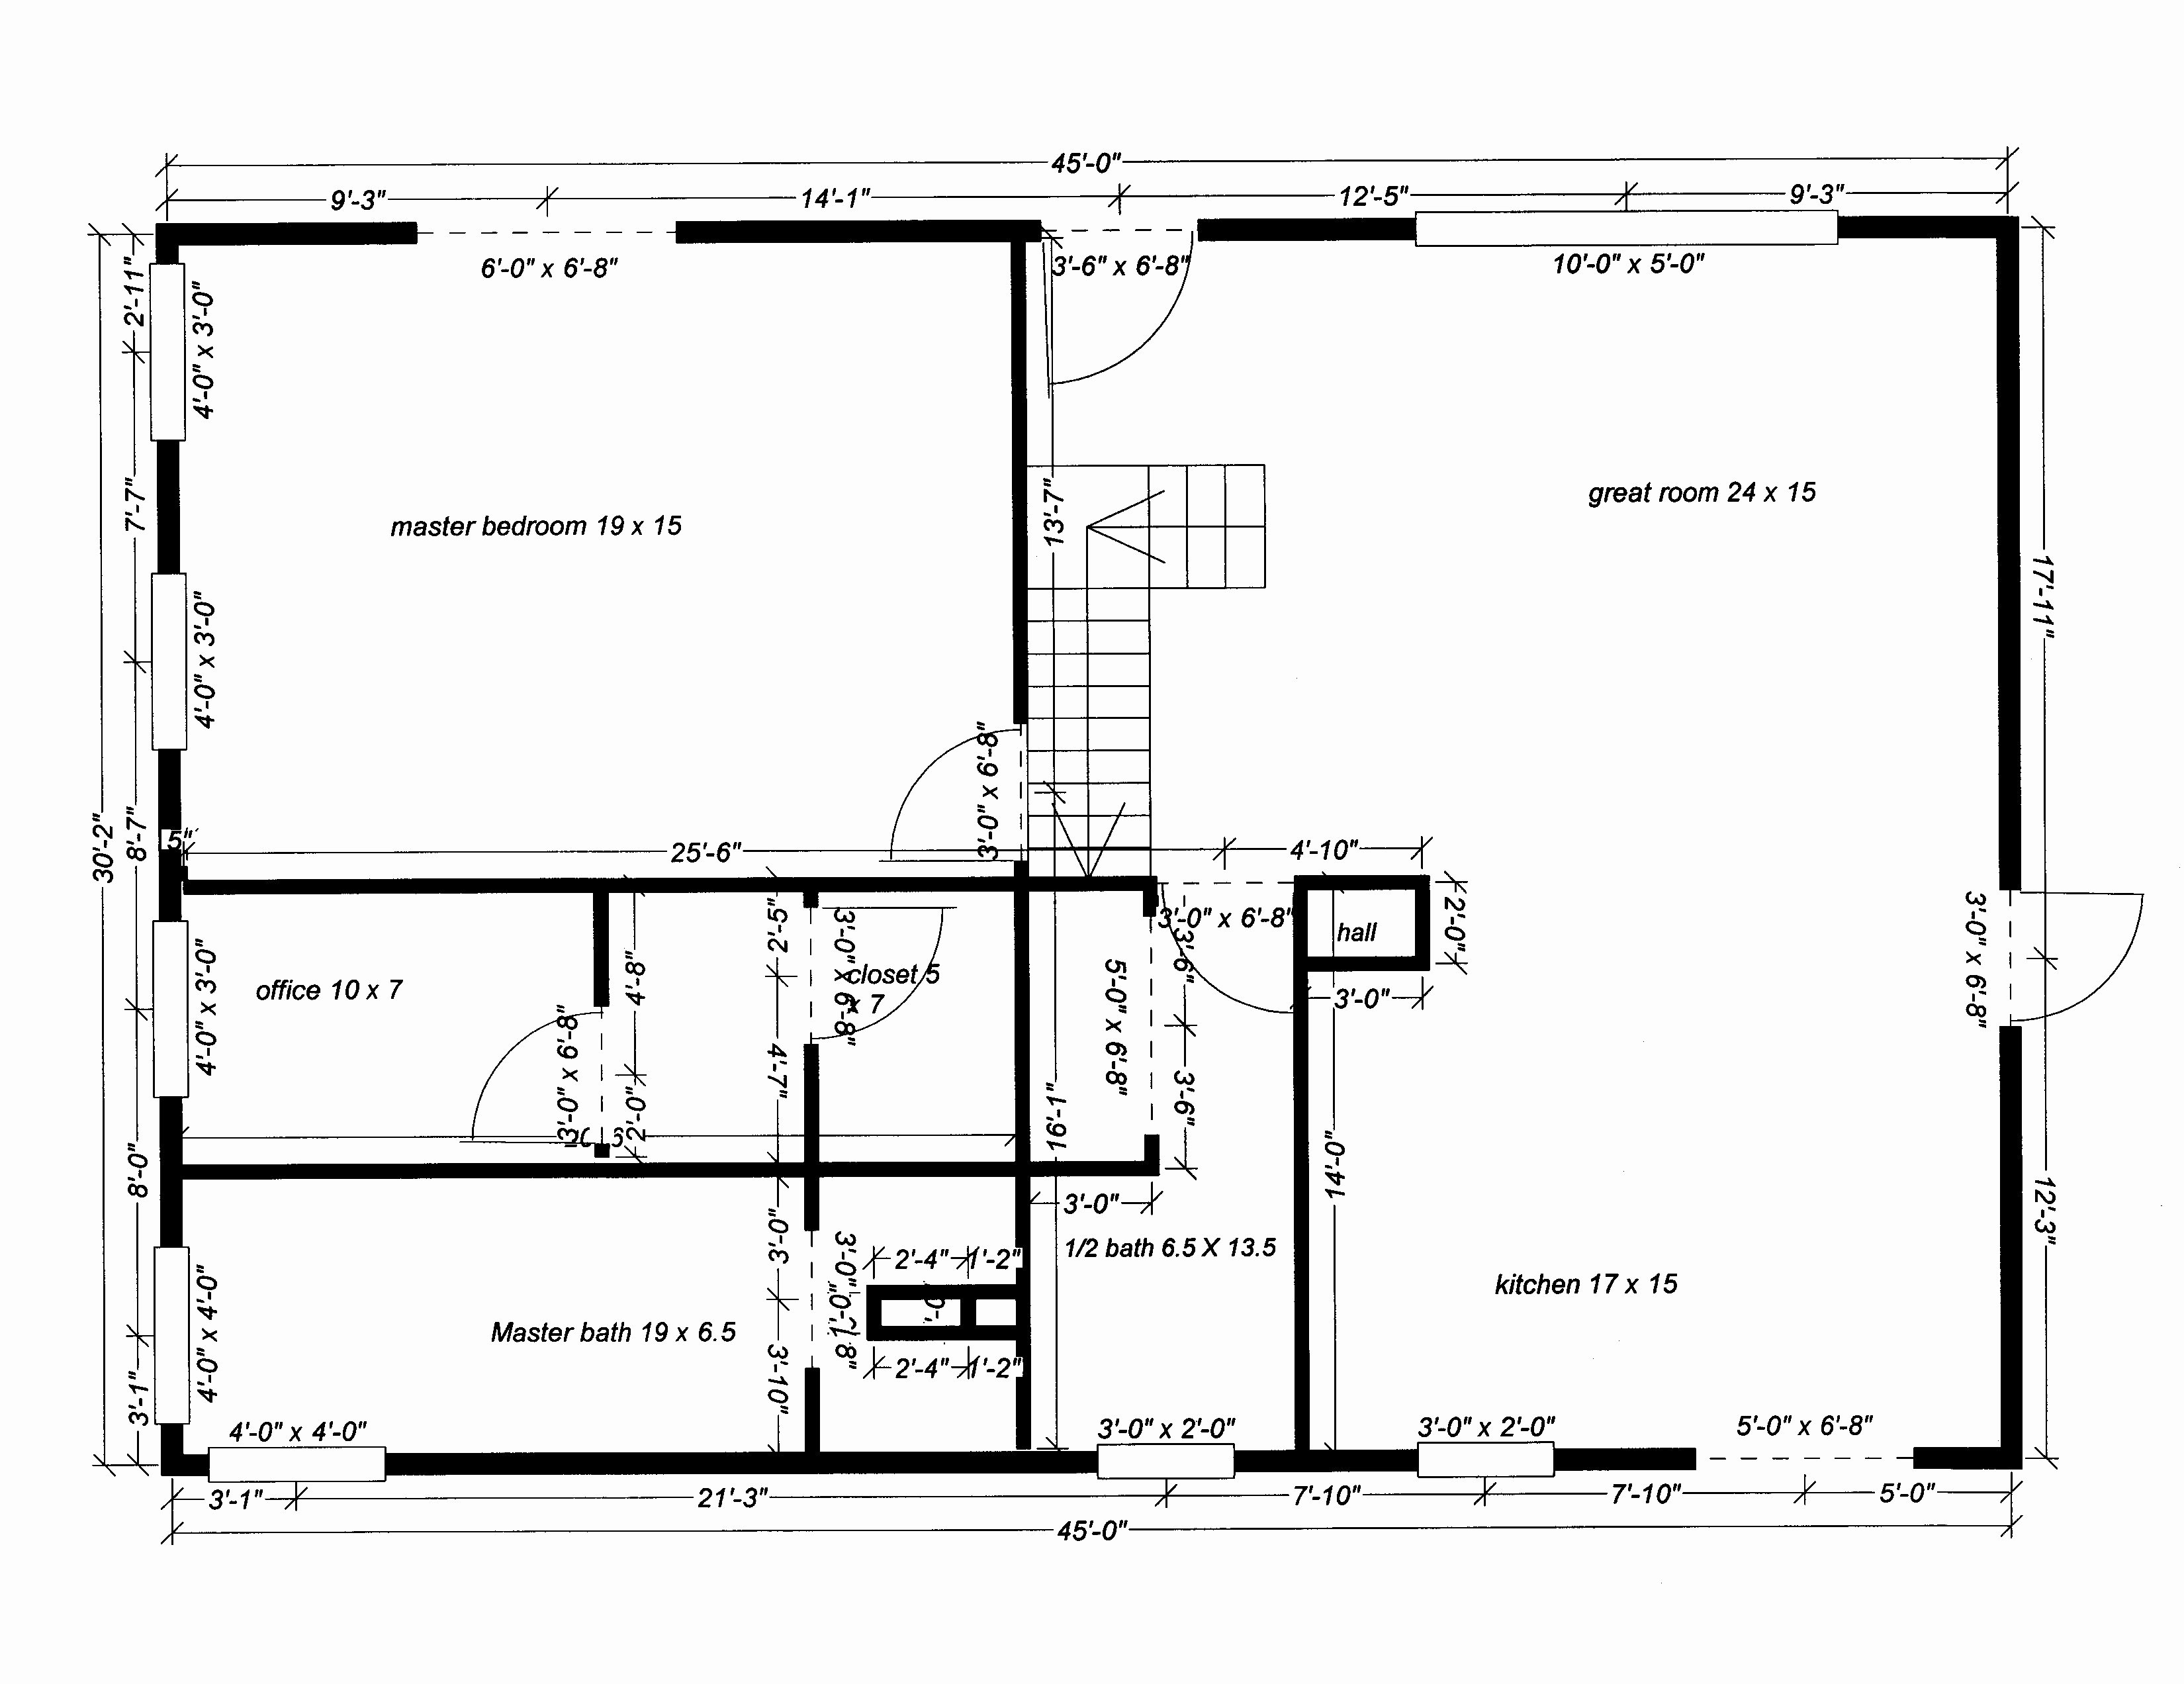 Excel Floor Plan Template Awesome Fresh Floor Plan Excel Gallery Home House Floor Plans